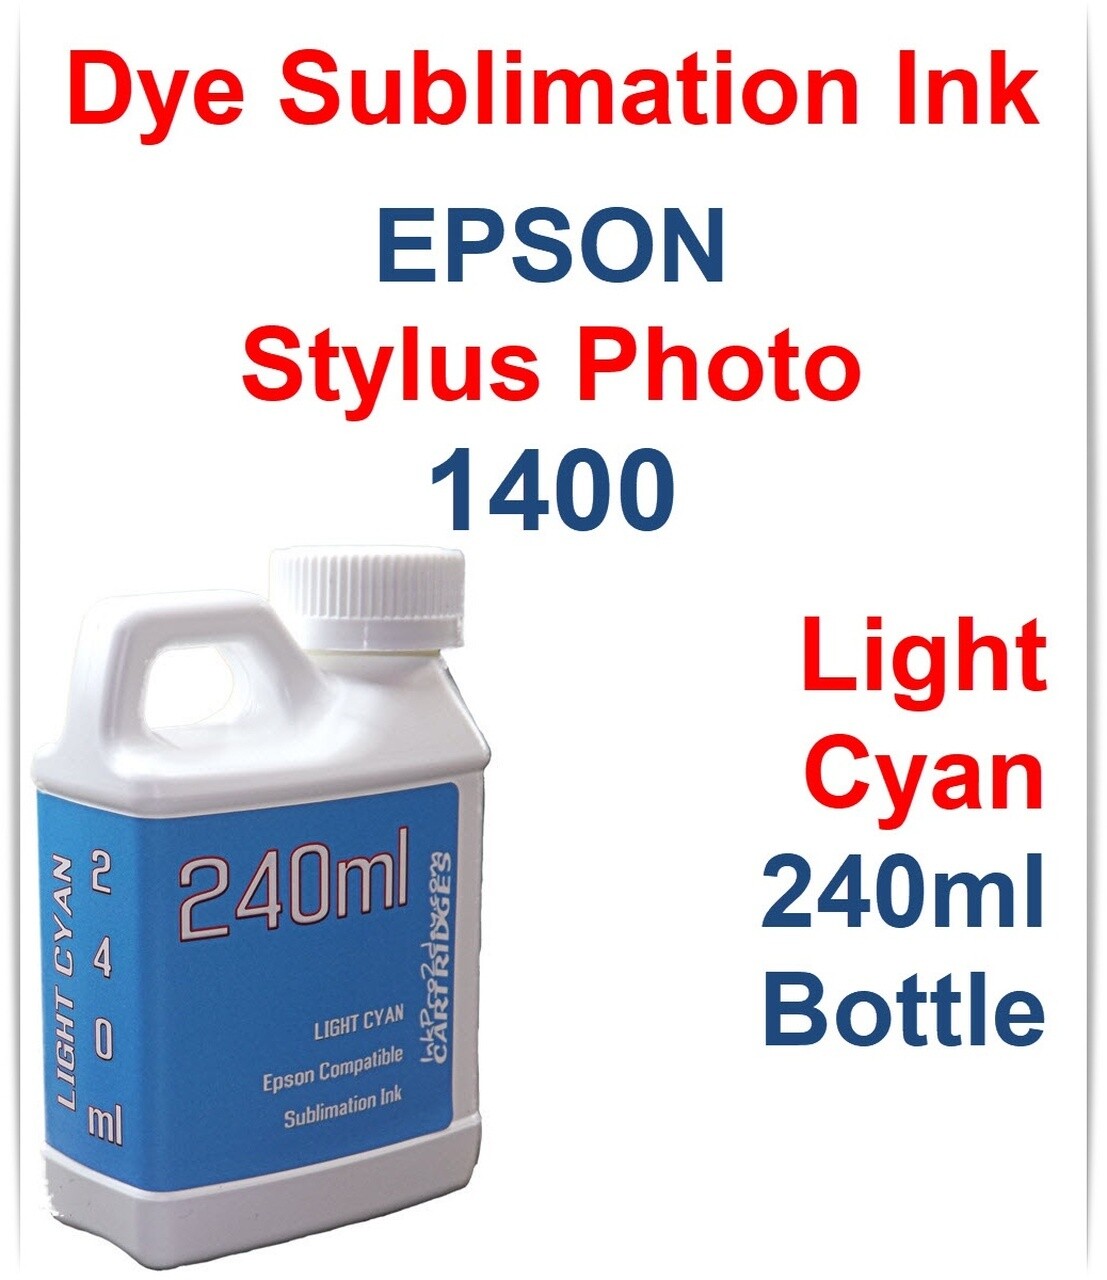 Light Cyan Dye Sublimation Ink 240ml bottle for Epson Stylus Photo 1400 Printer